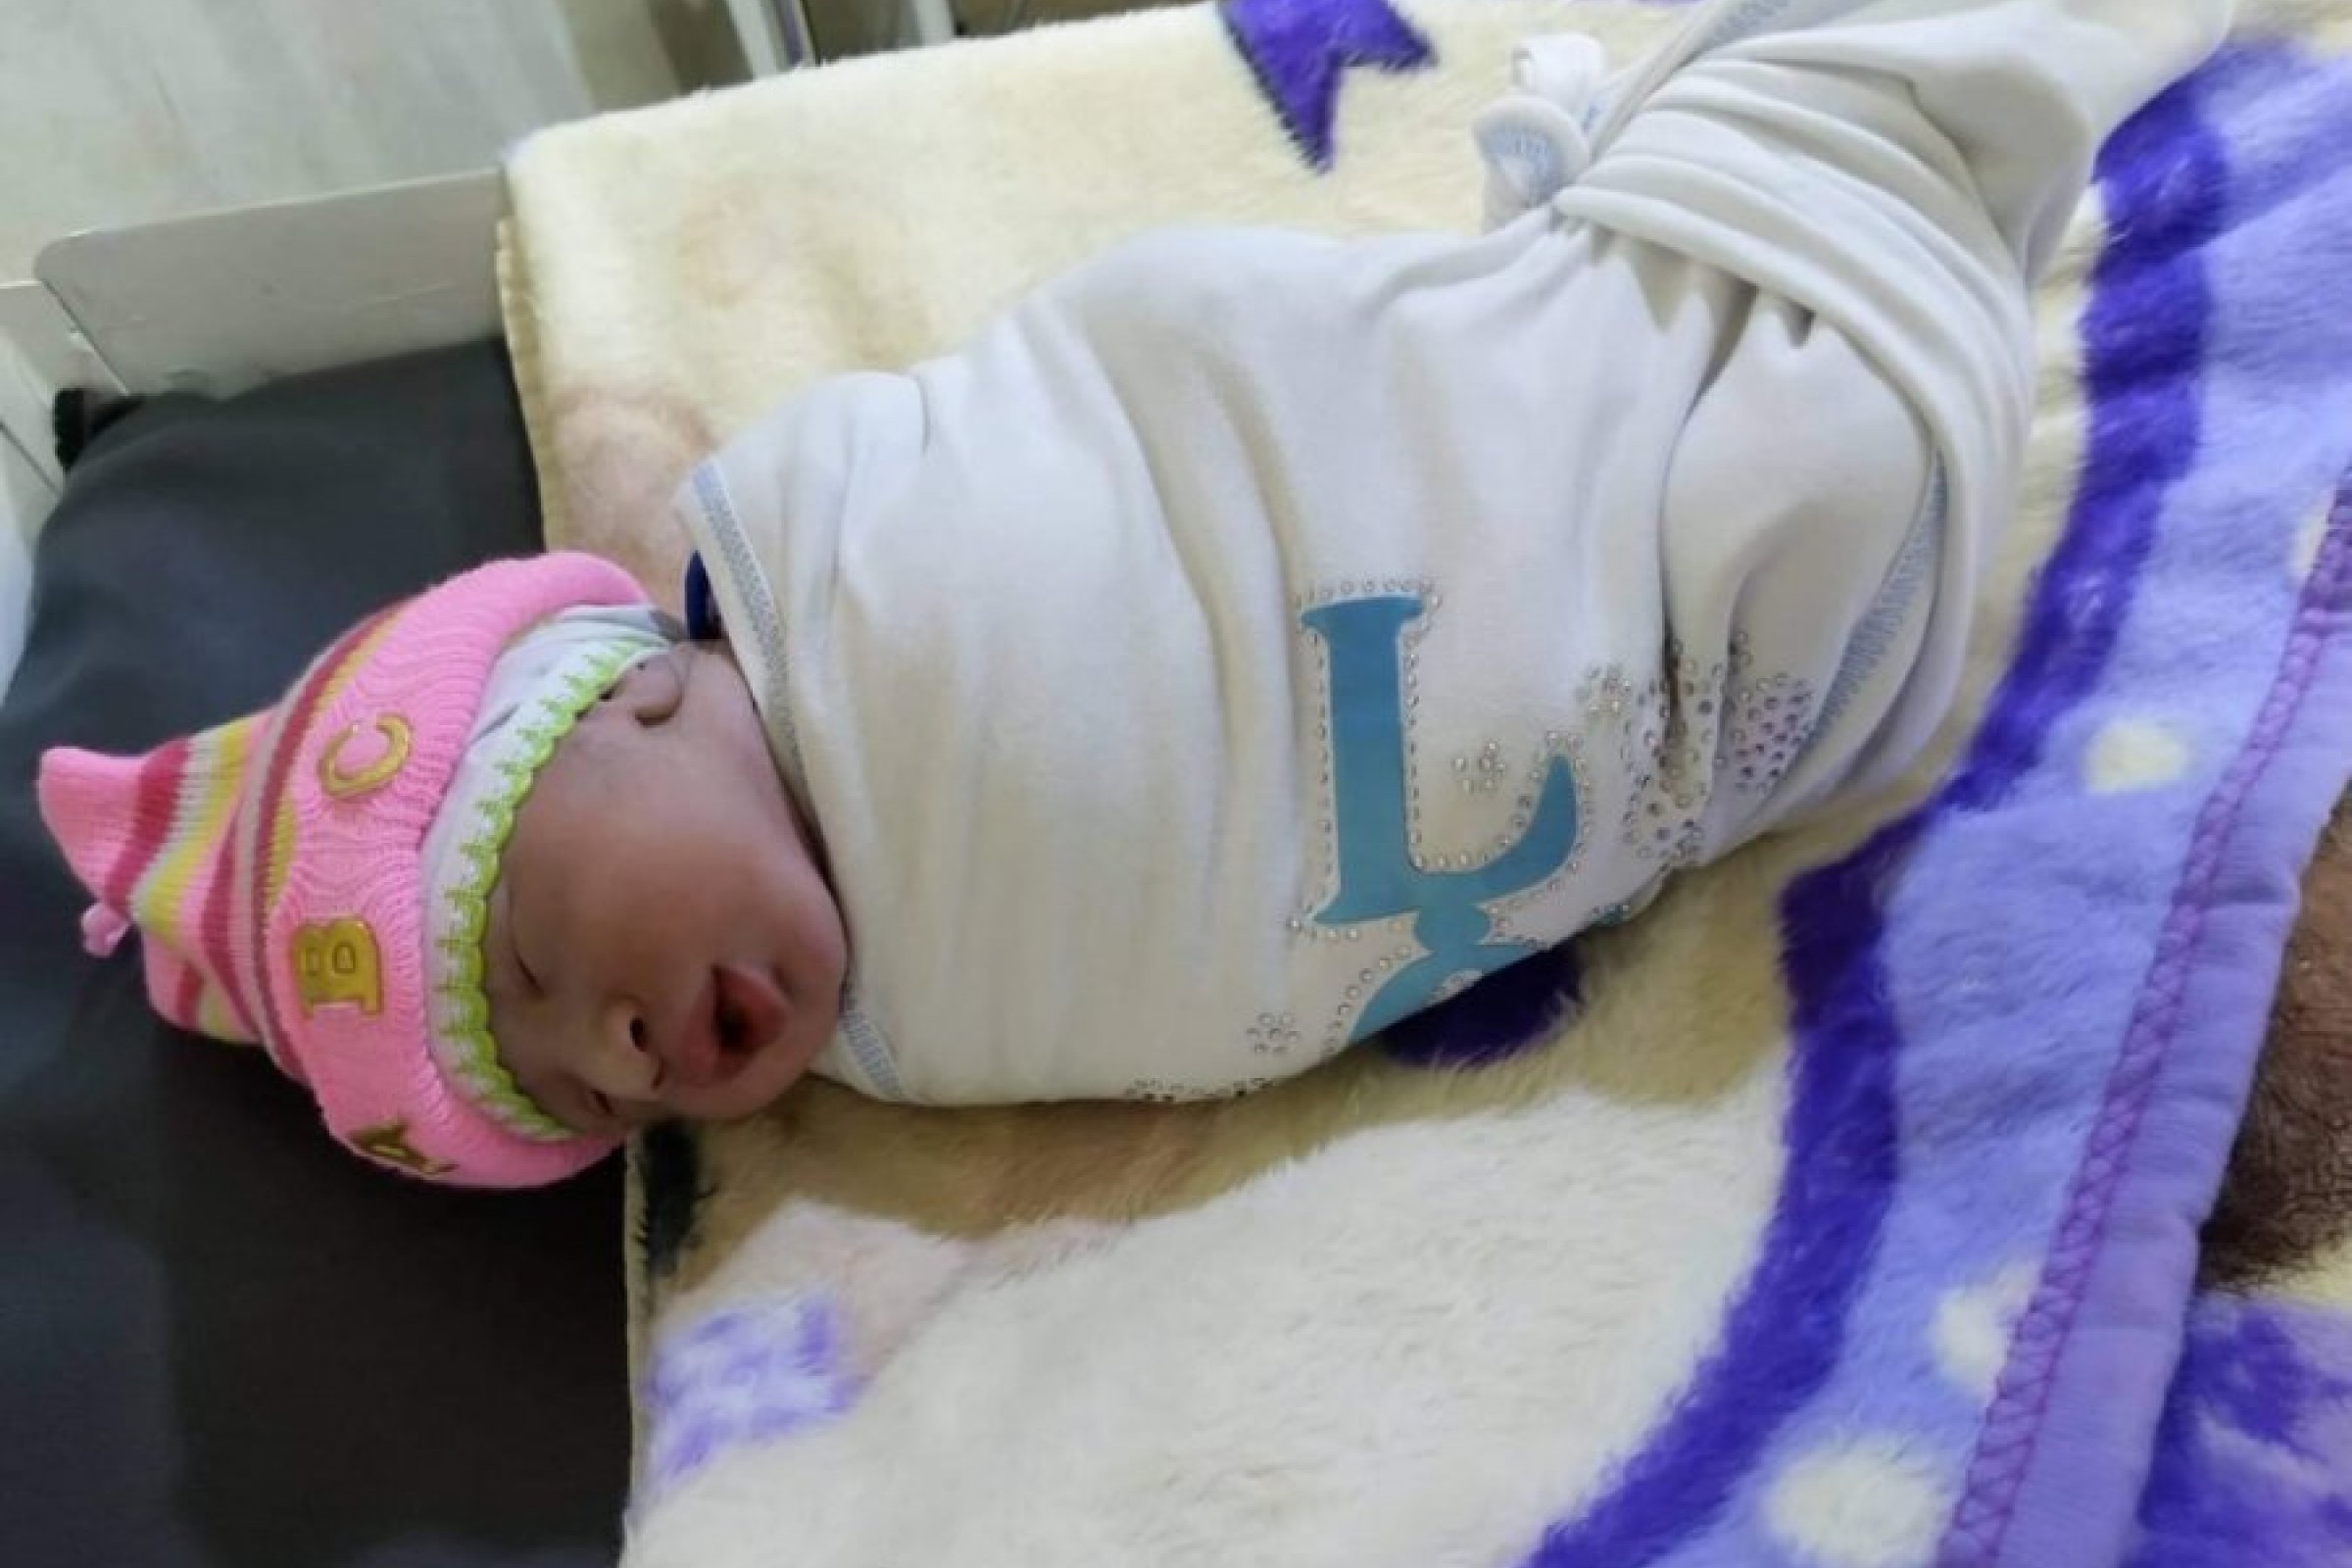 Baby Jood from Mosul, Iraq